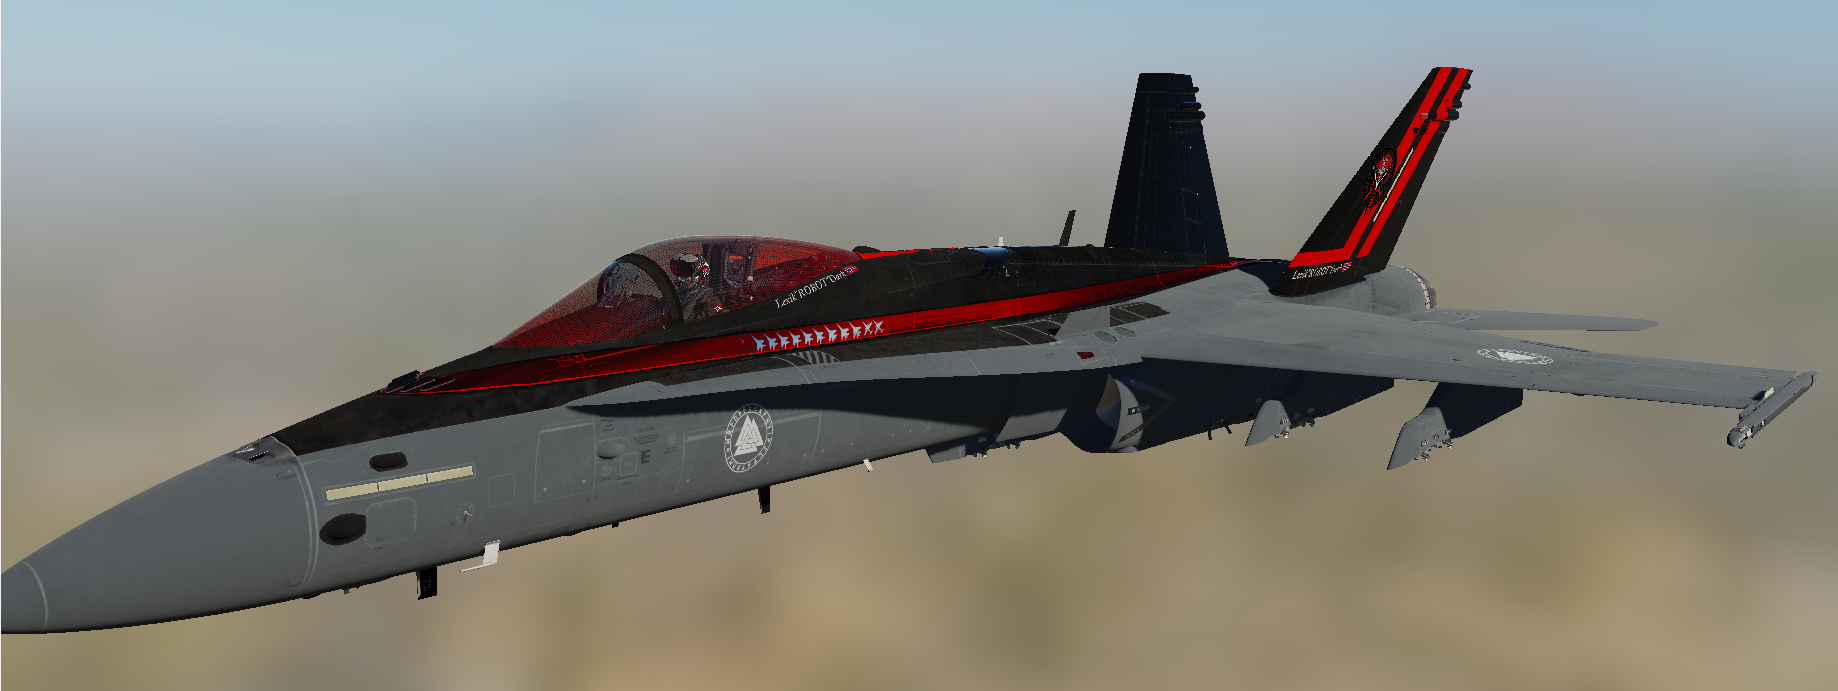 Aesir F-18C Hornet